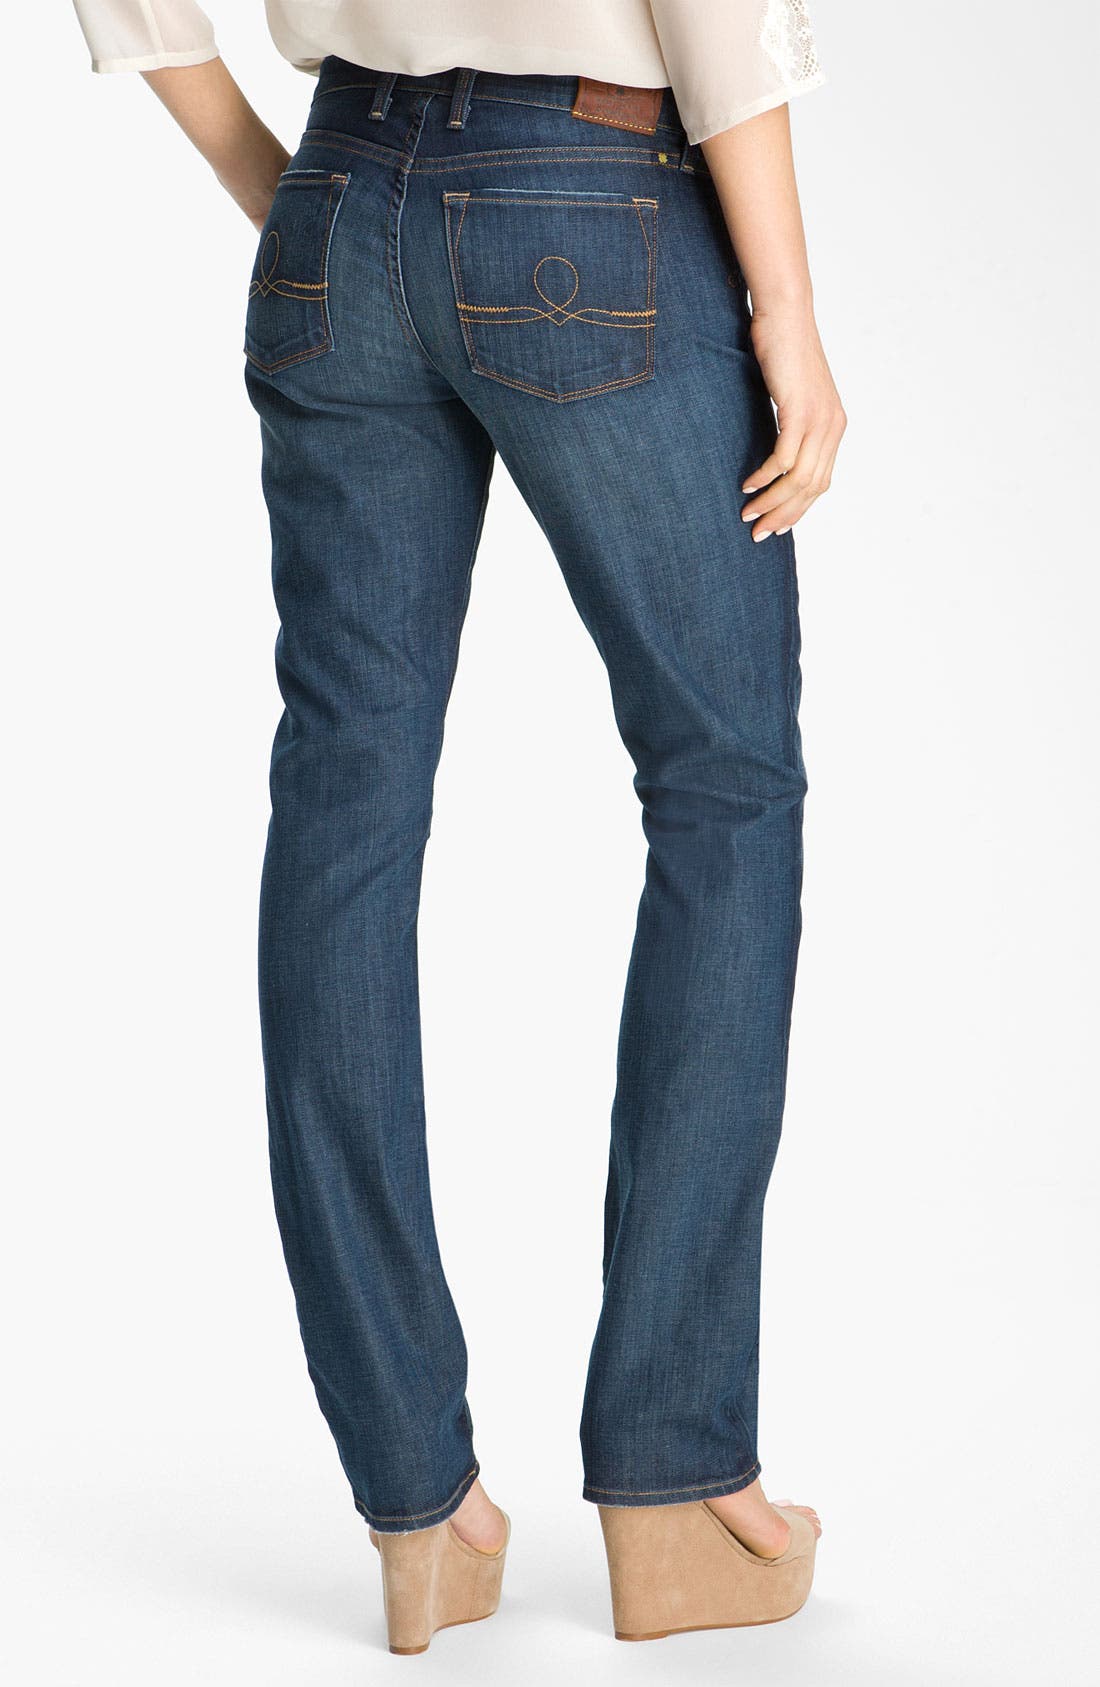 calvin klein jeans western shirt